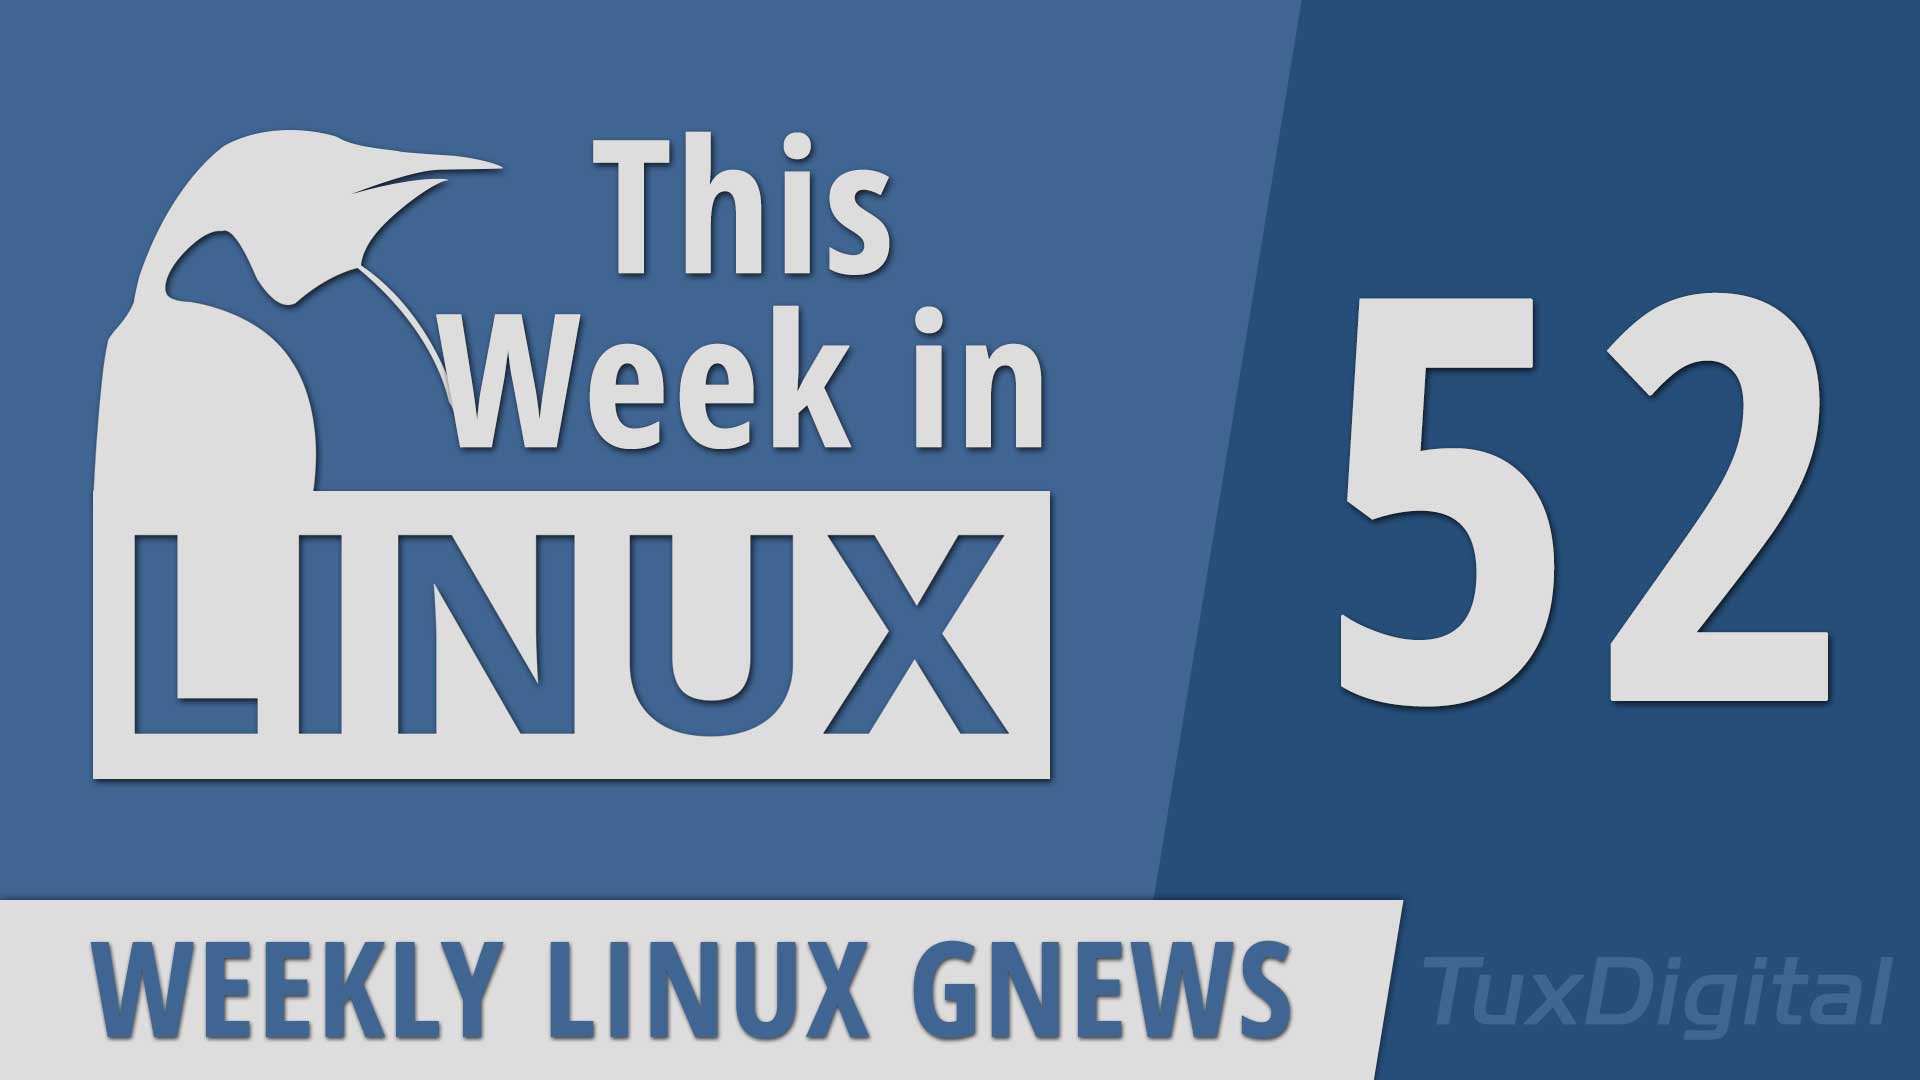 Episode This Week In Linux Tuxdigital